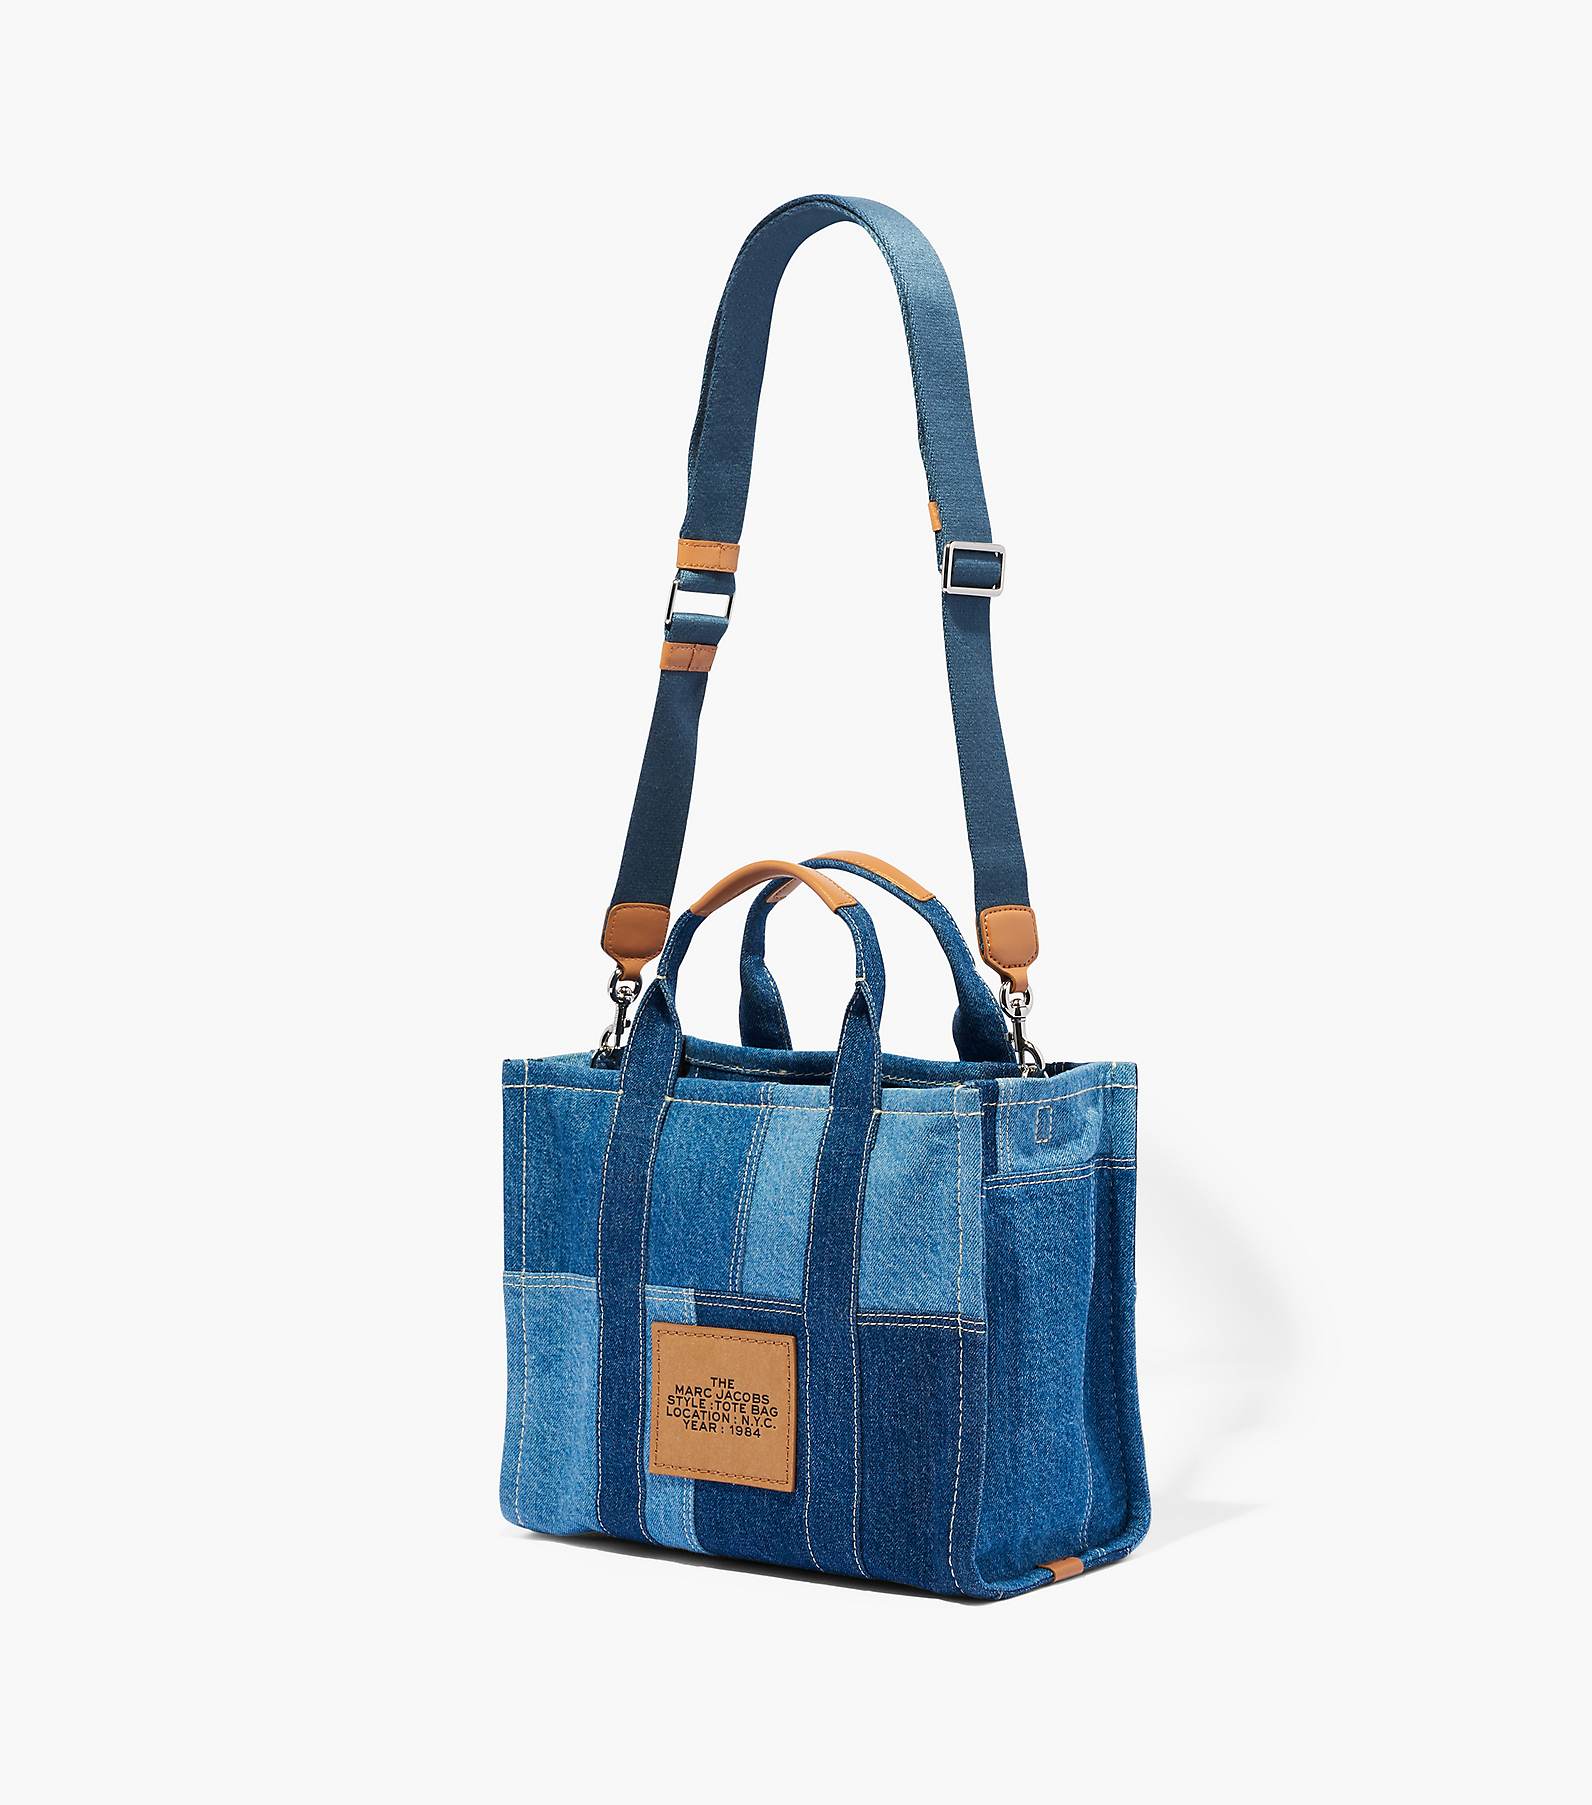 Marc Jacobs The Tote Bag Medium 33cm Blue denim without shoulder